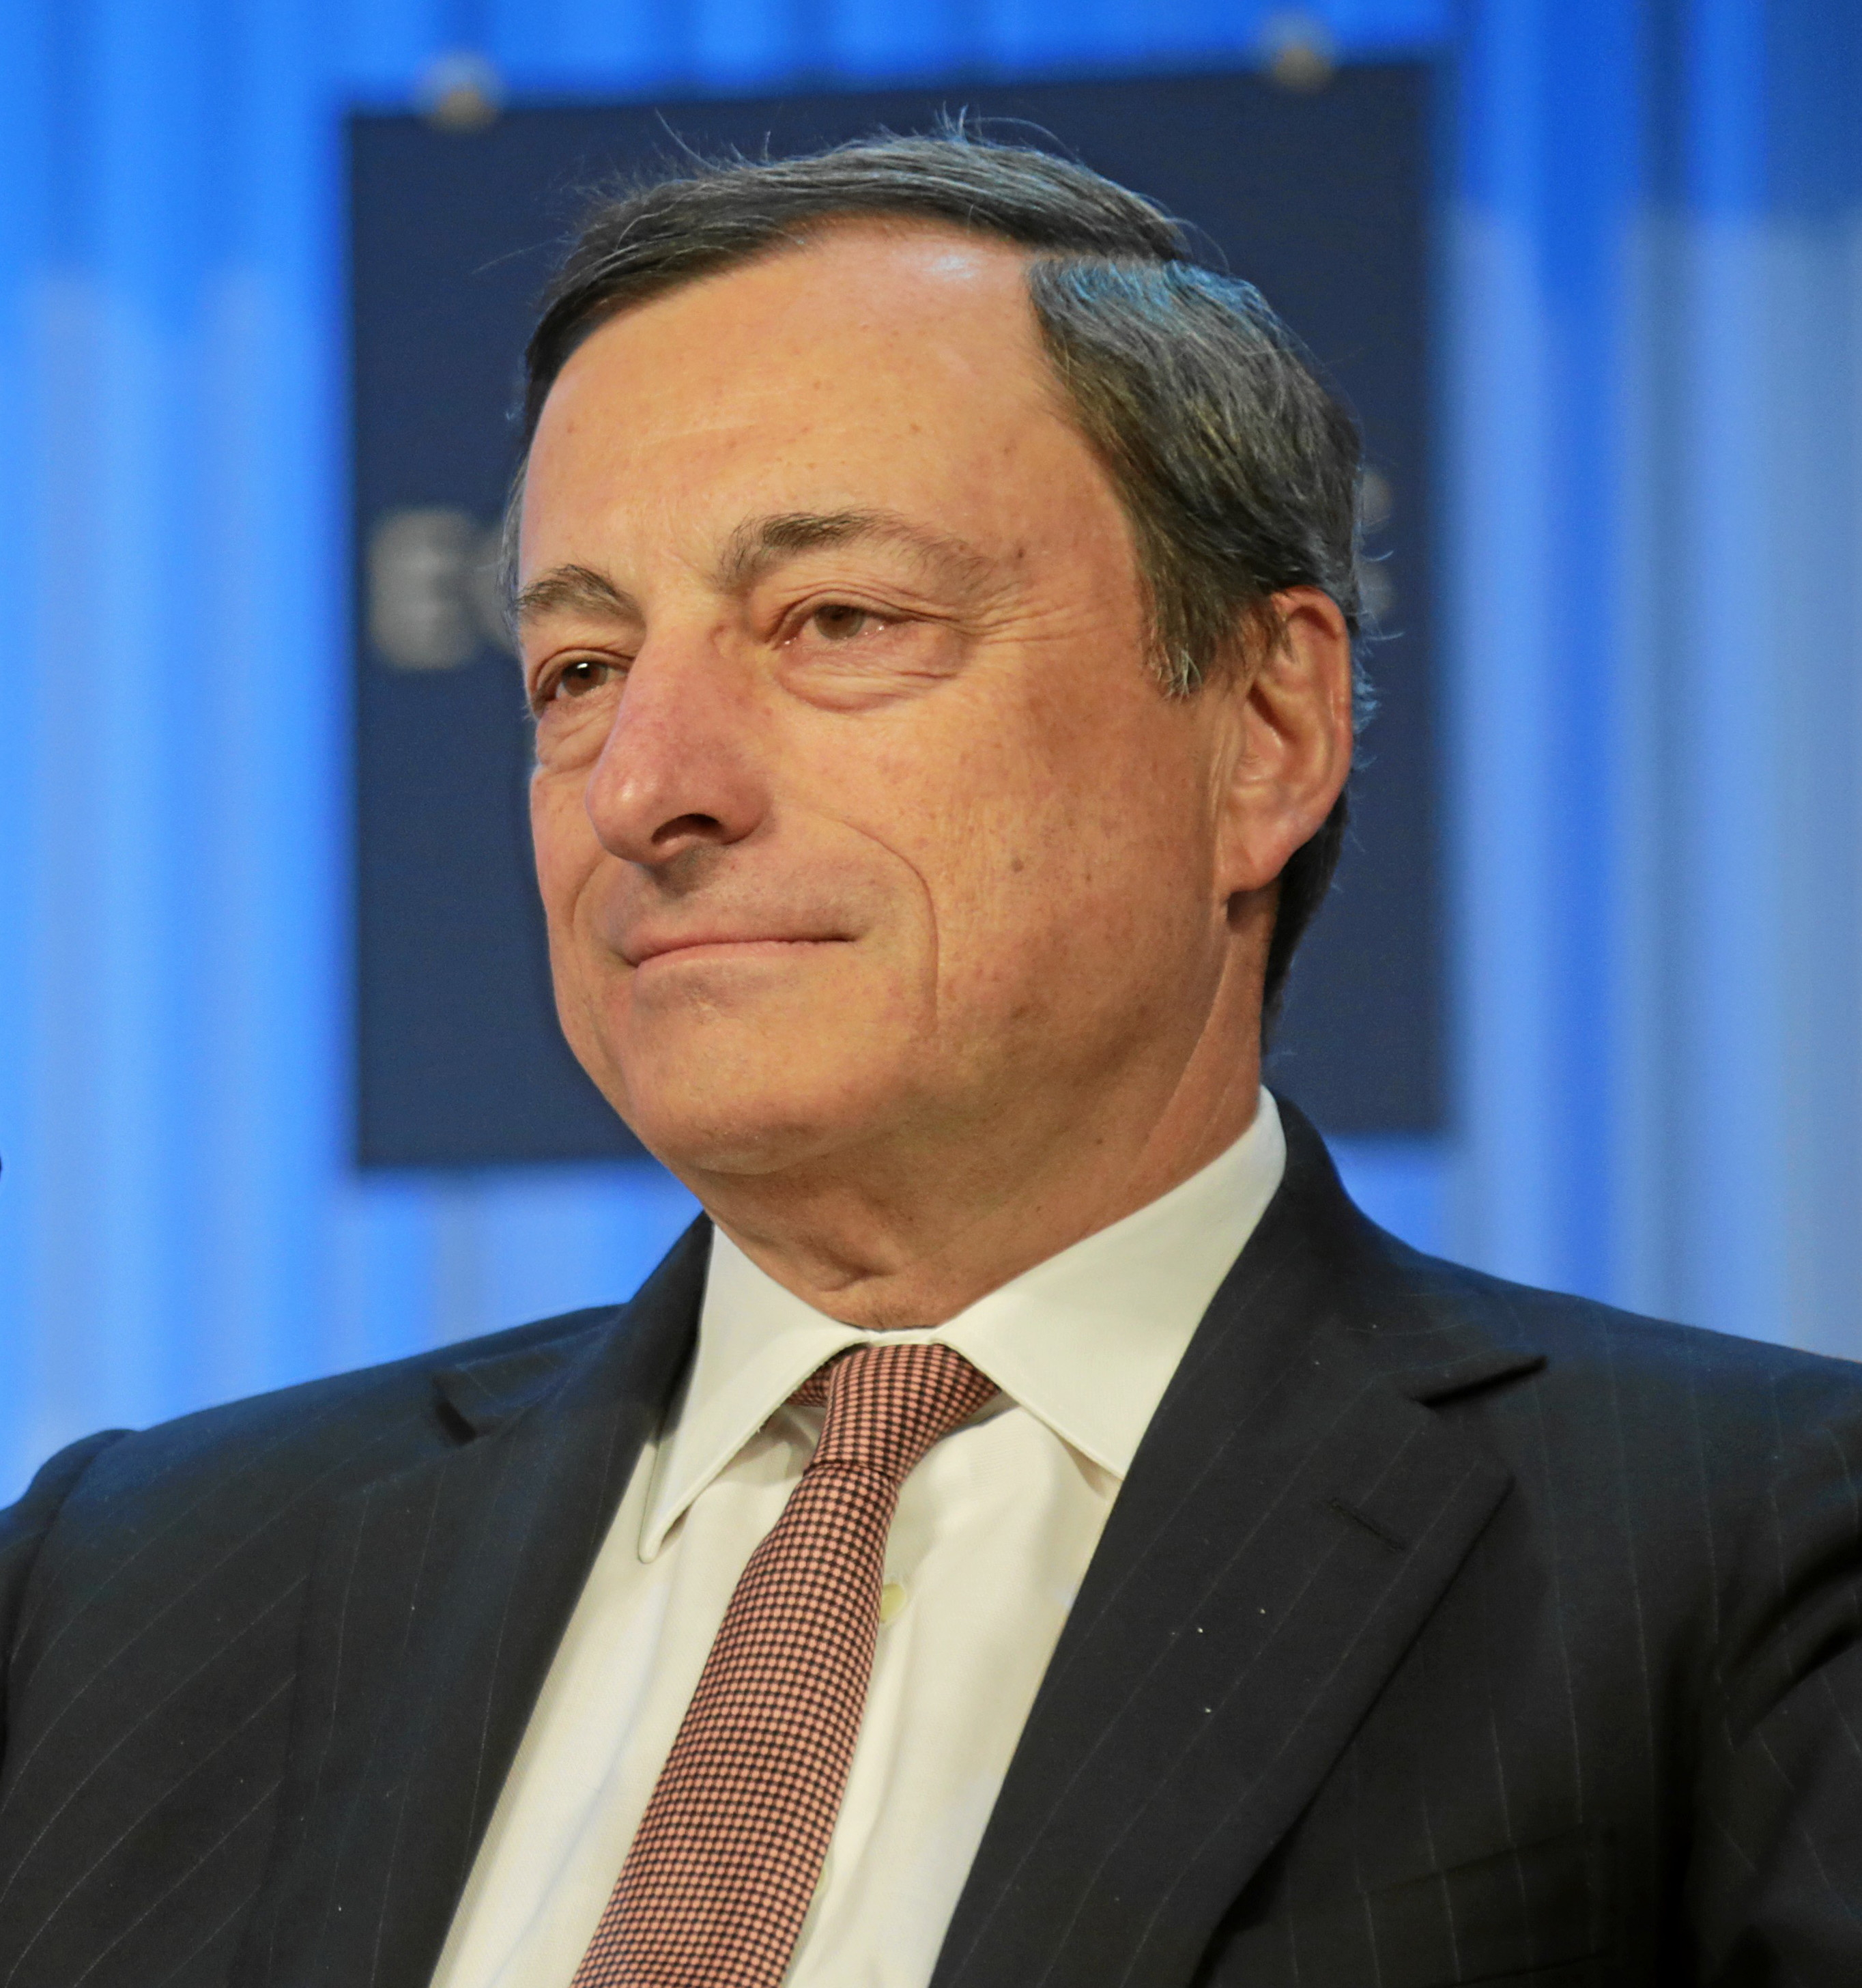 Special Address: Mario Draghi